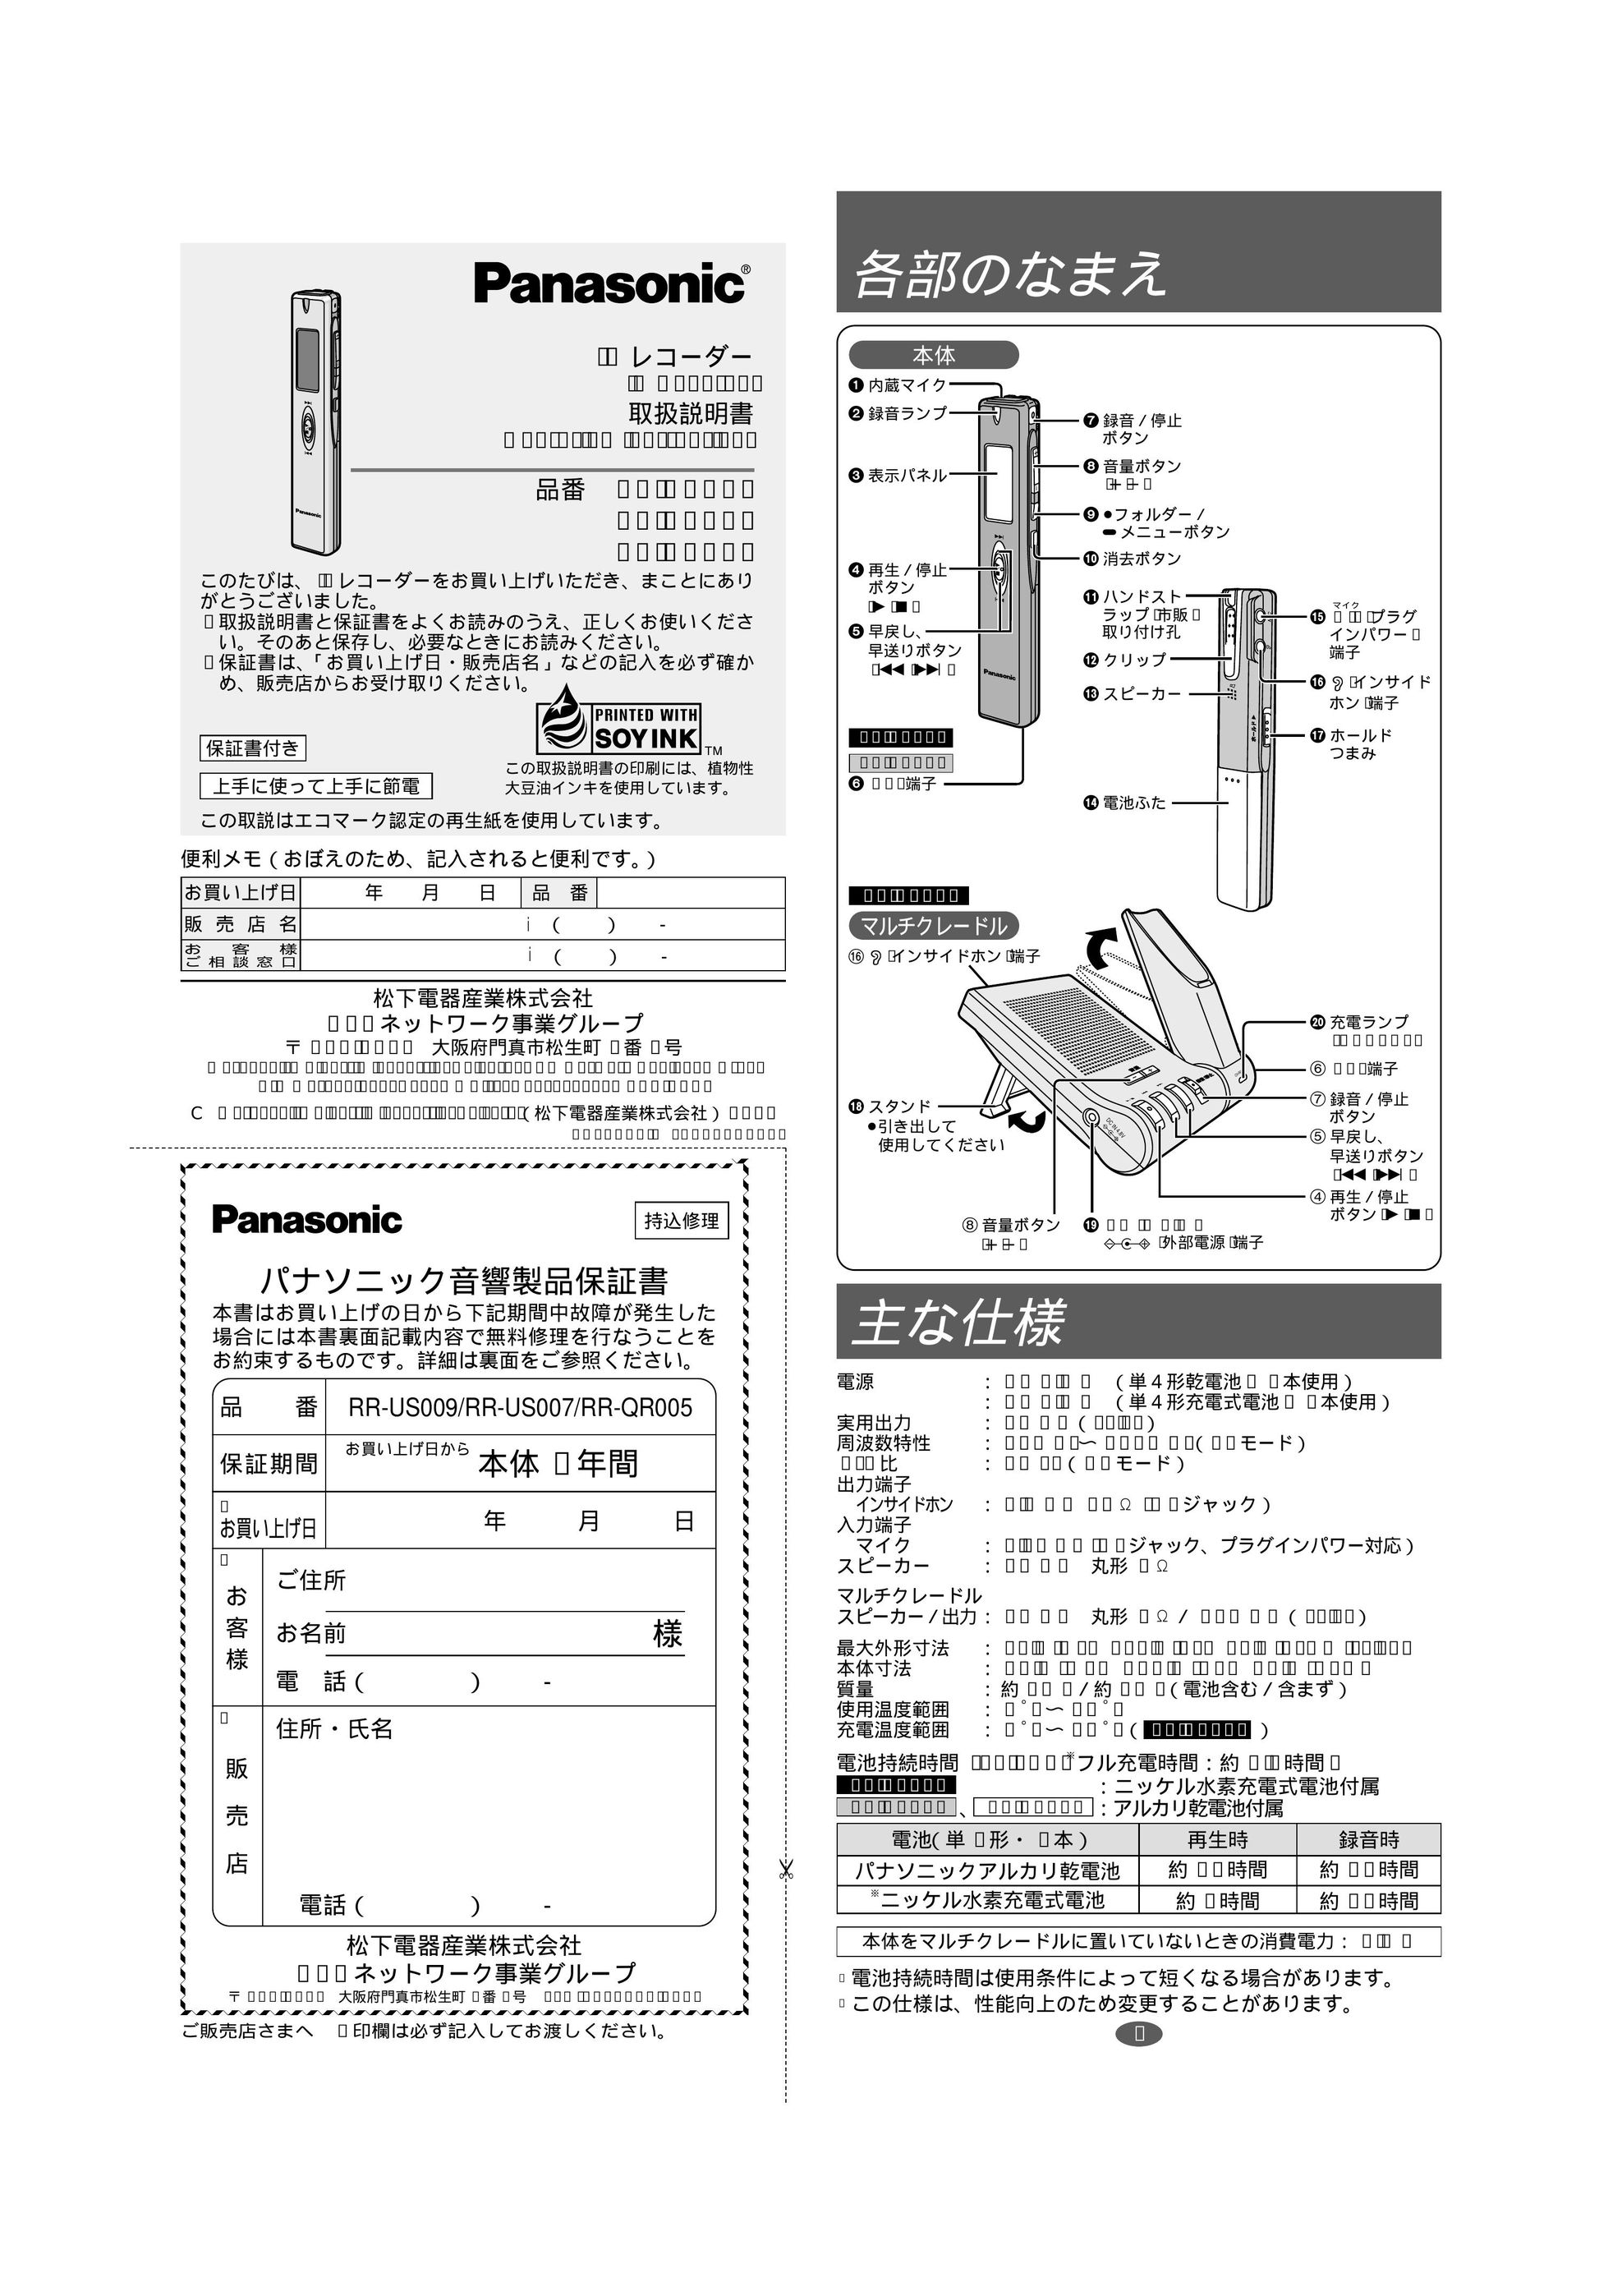 Panasonic RR-US007 Microcassette Recorder User Manual